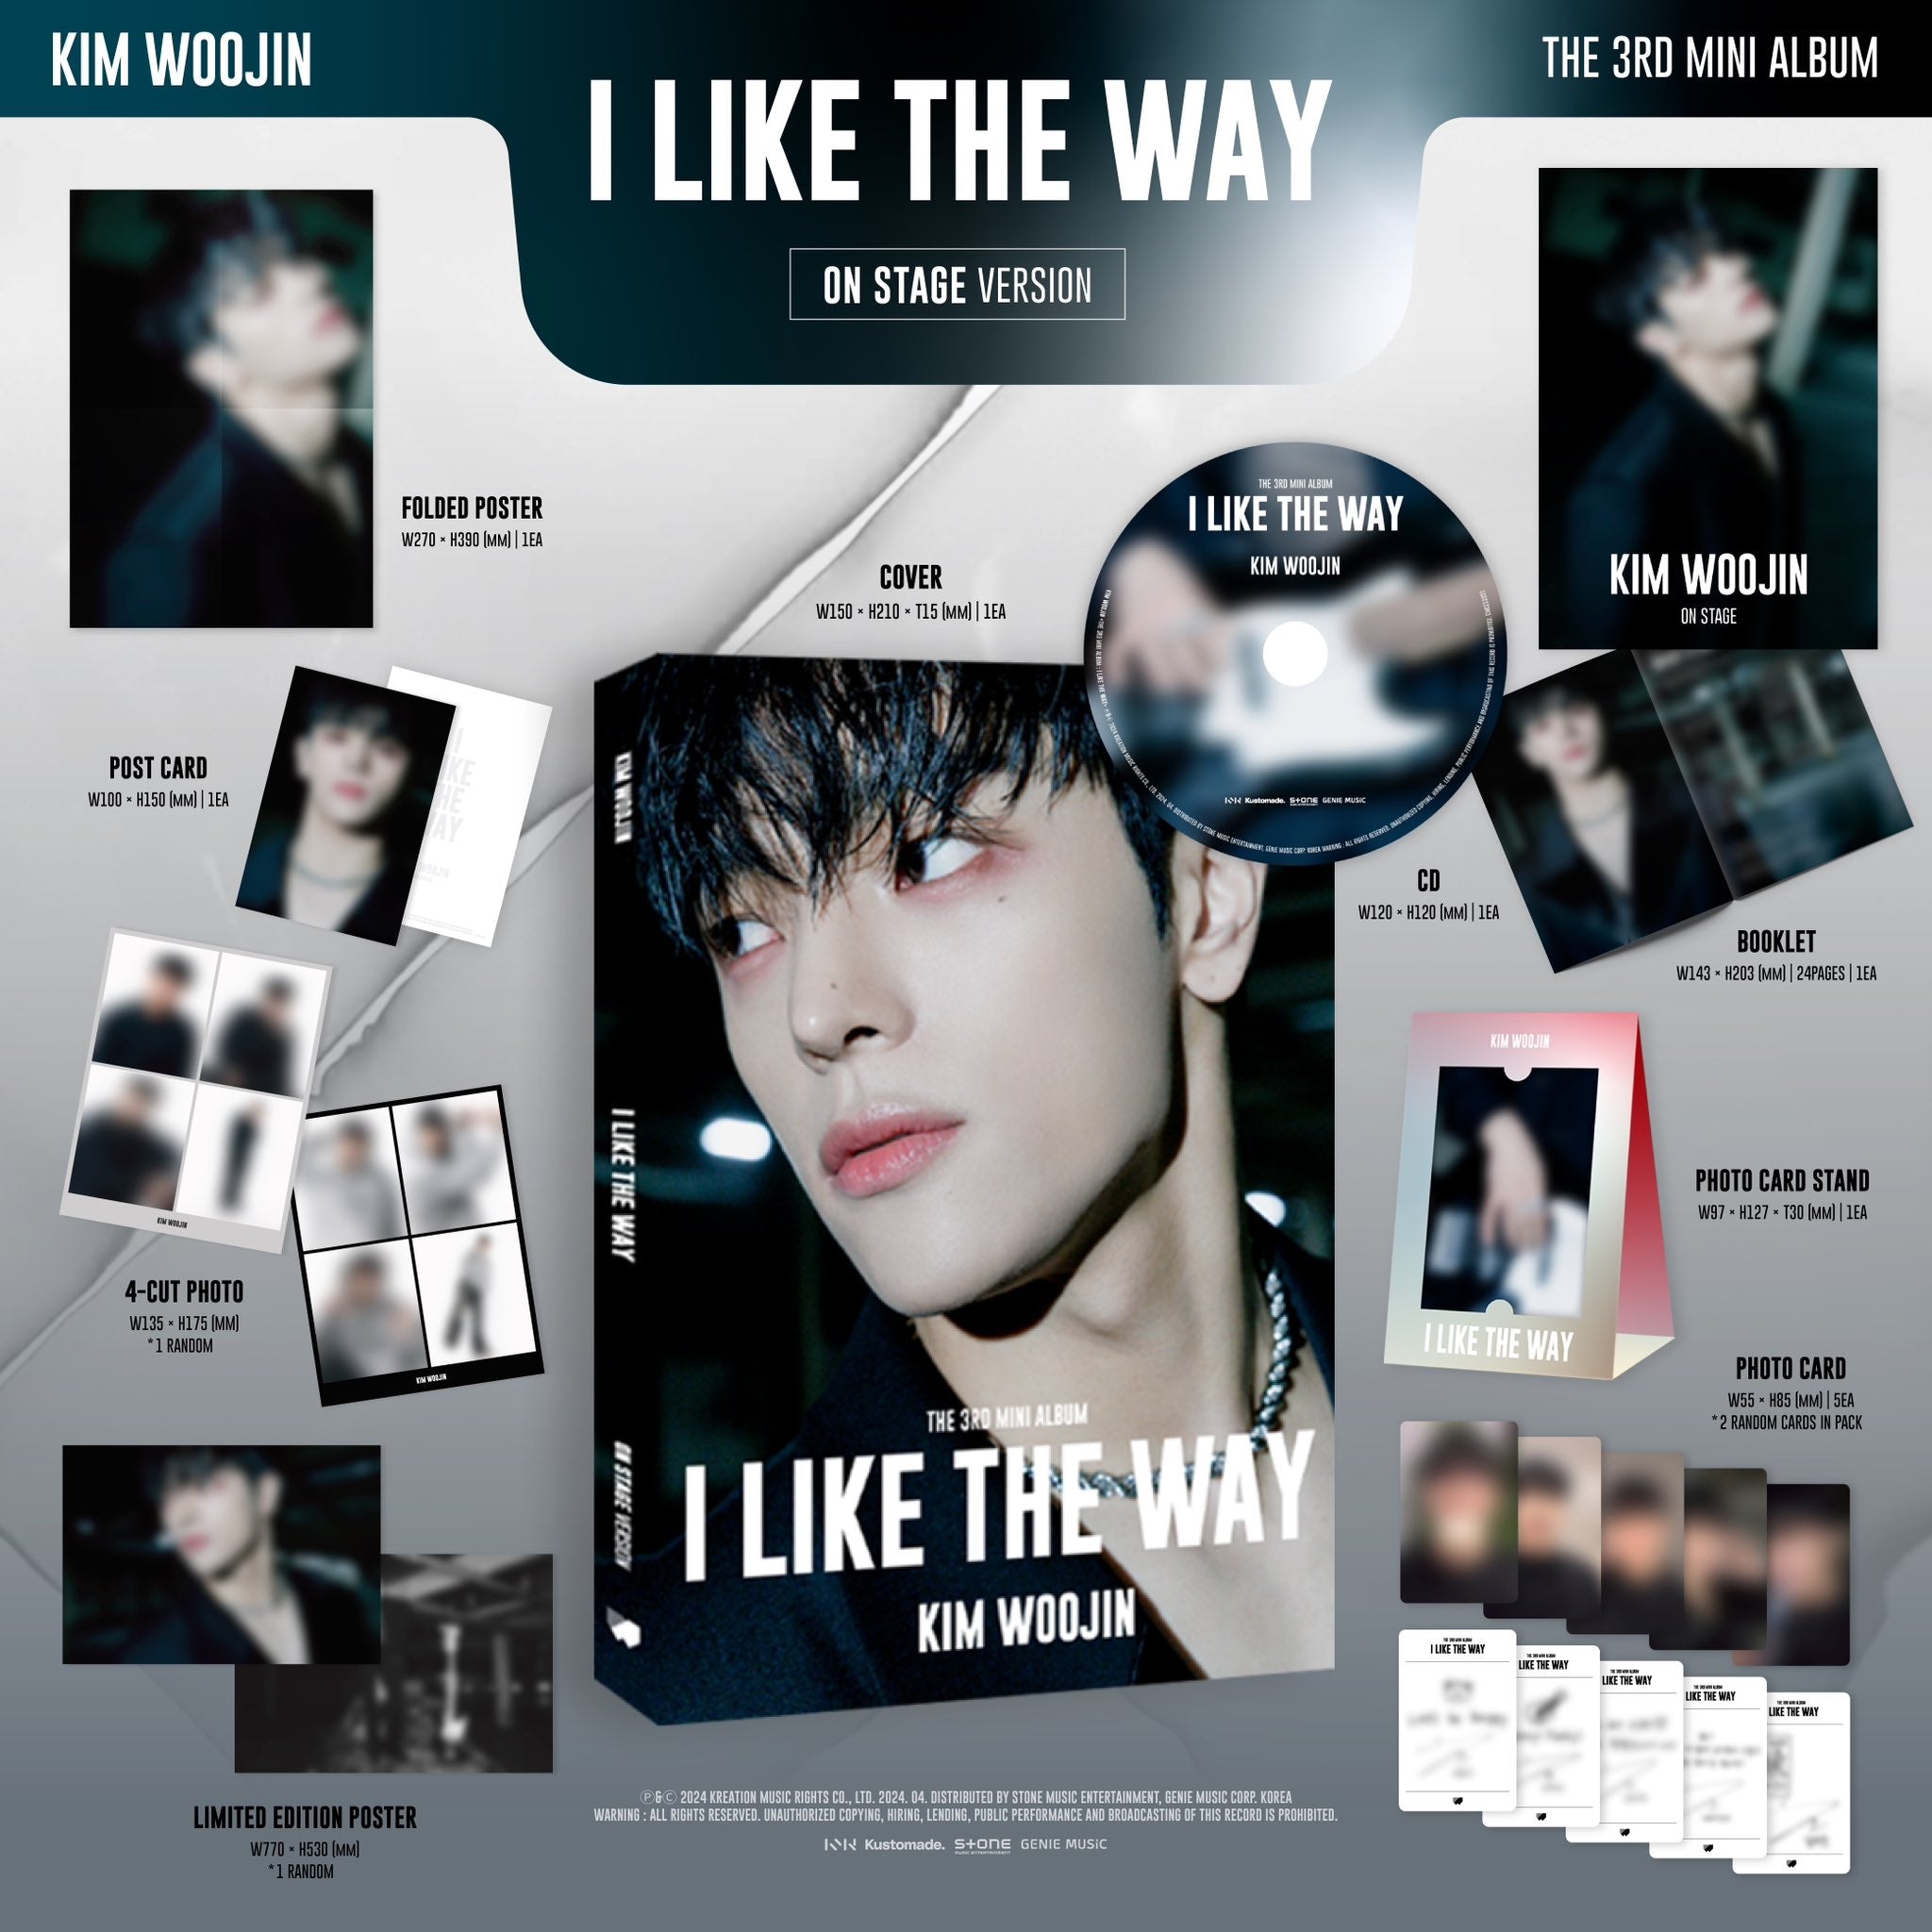 Kim Woojin 3rd Mini Album "I LIKE THE WAY"